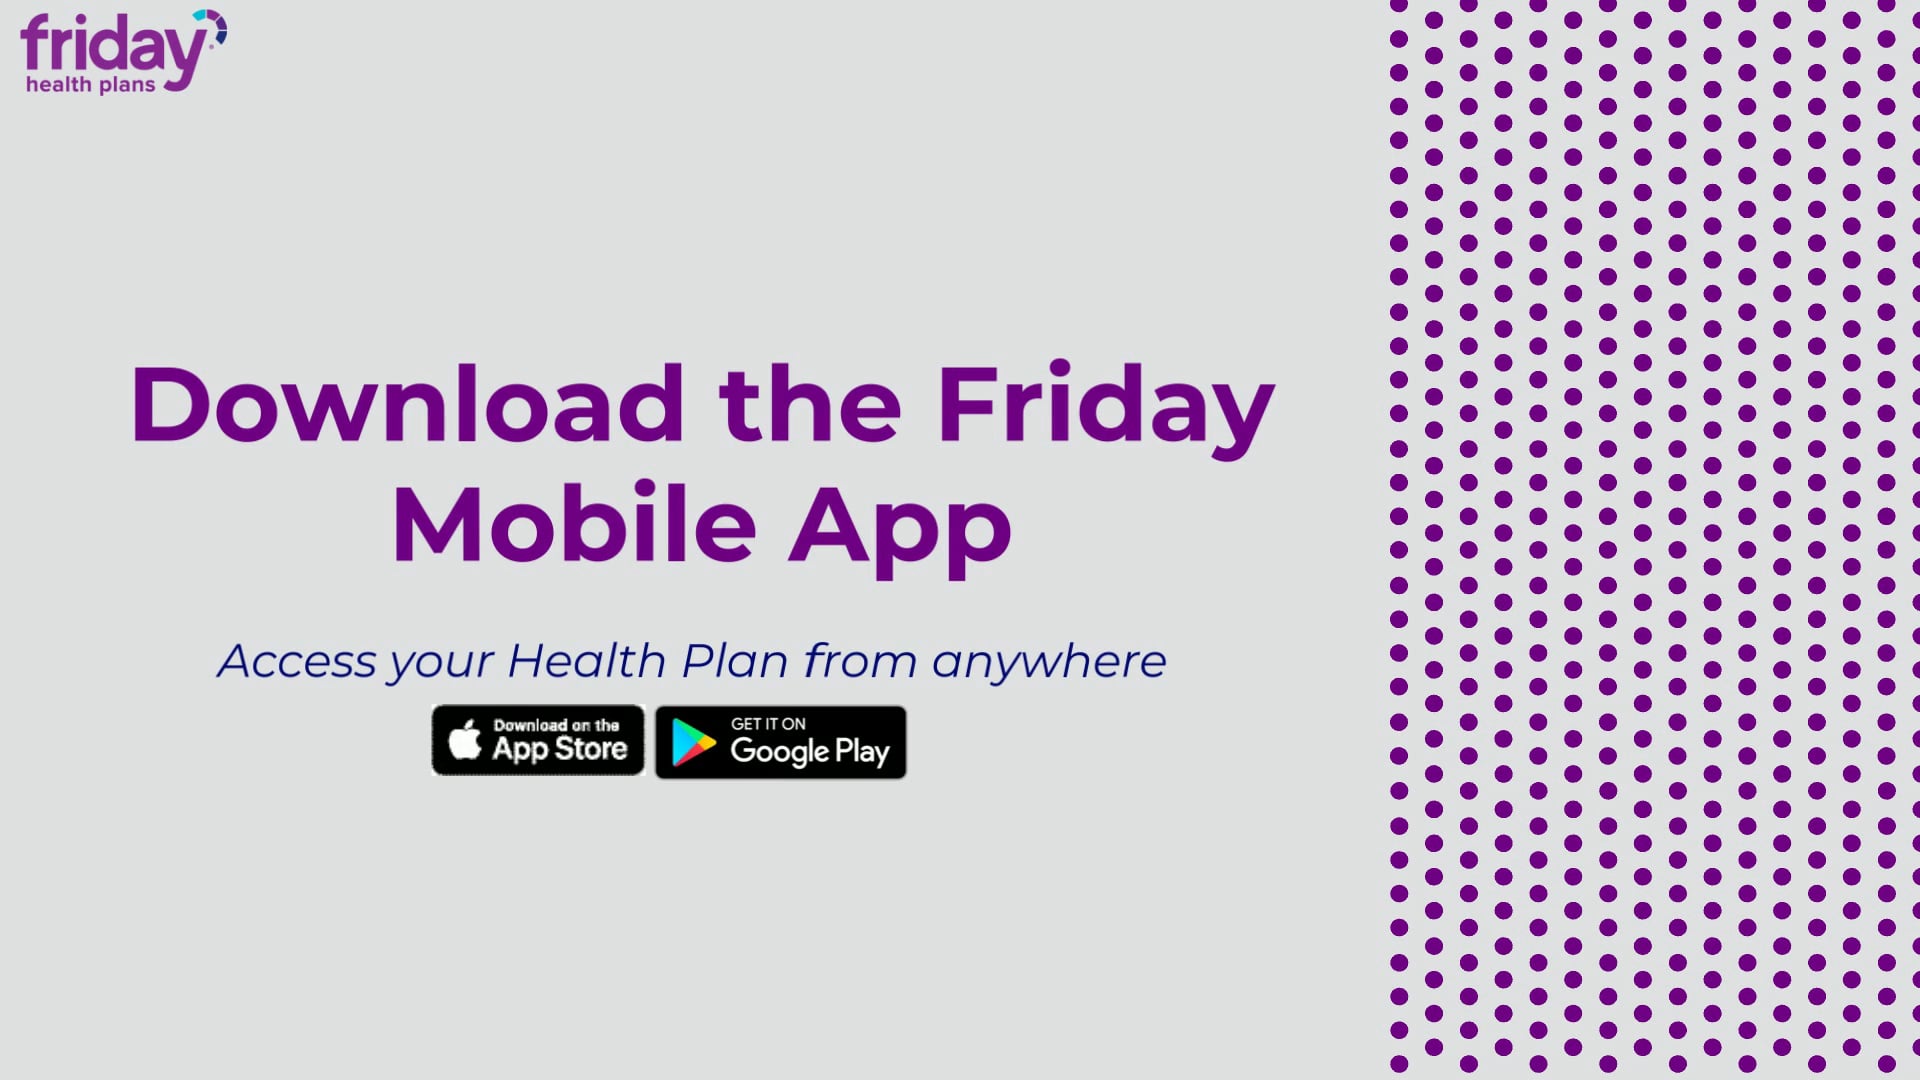 friday-health-plans-mobile-app-on-vimeo